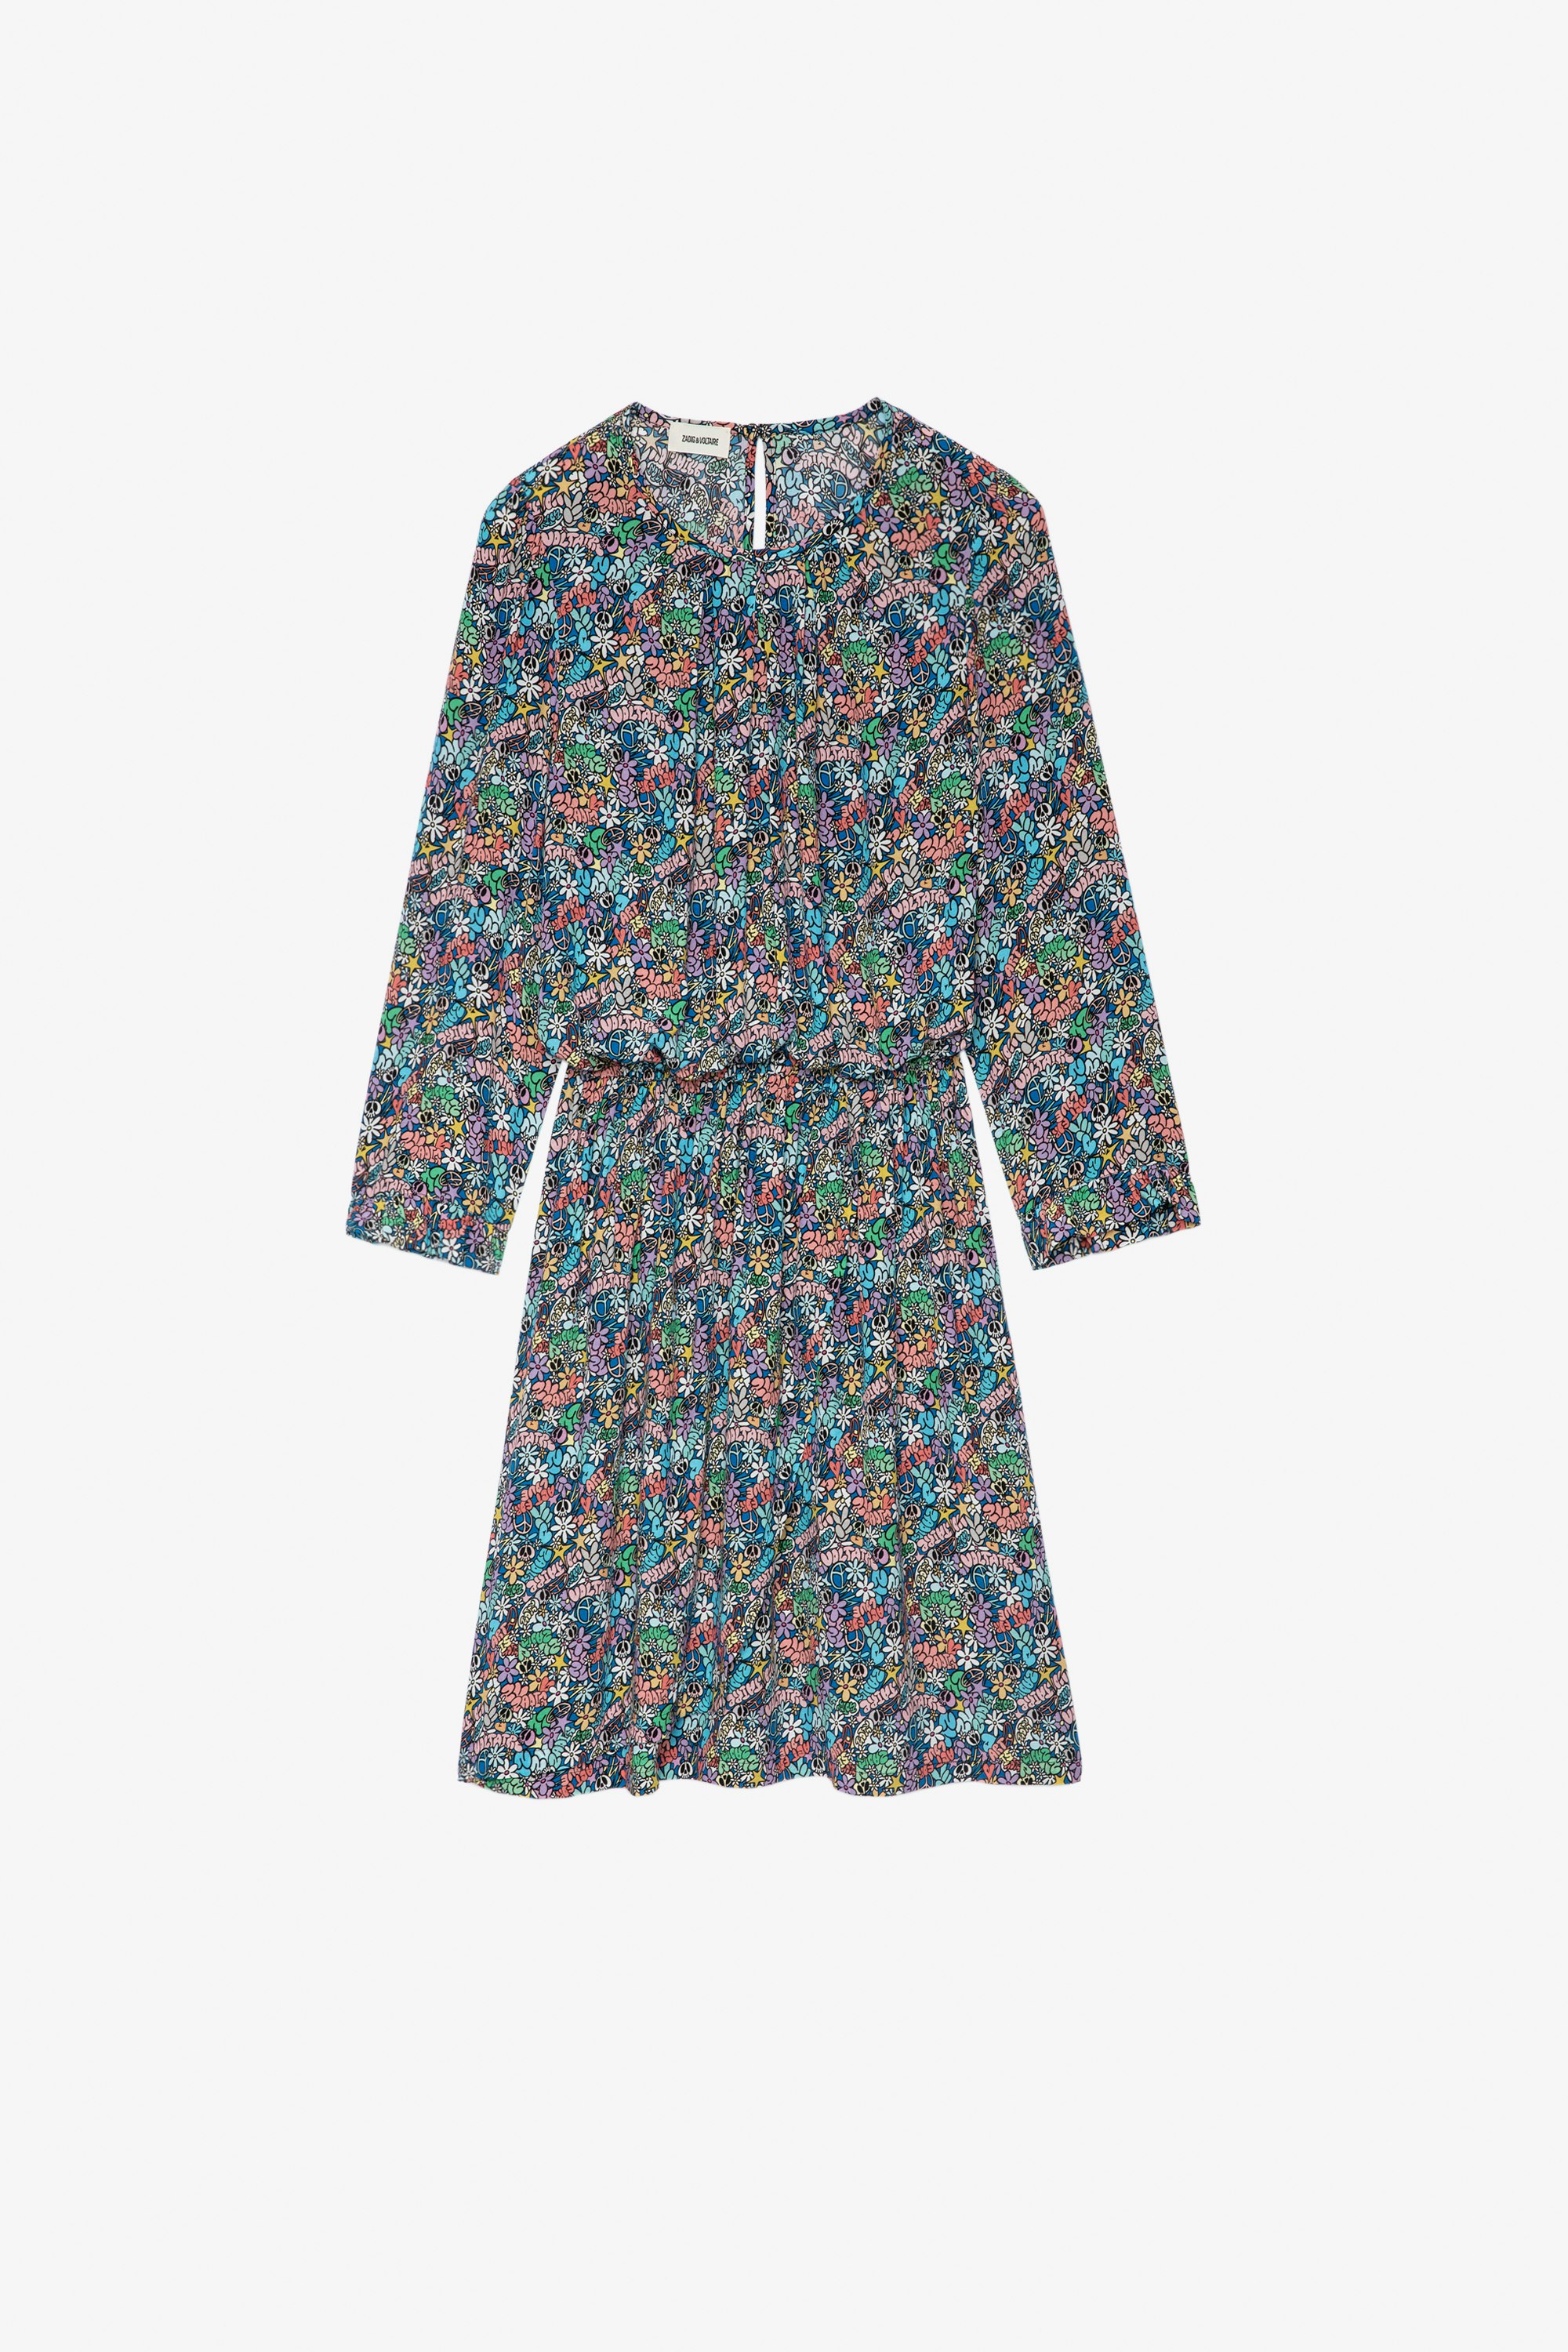 Rivy Dress Women's short dress in floral print with asymmetrical draped skirt